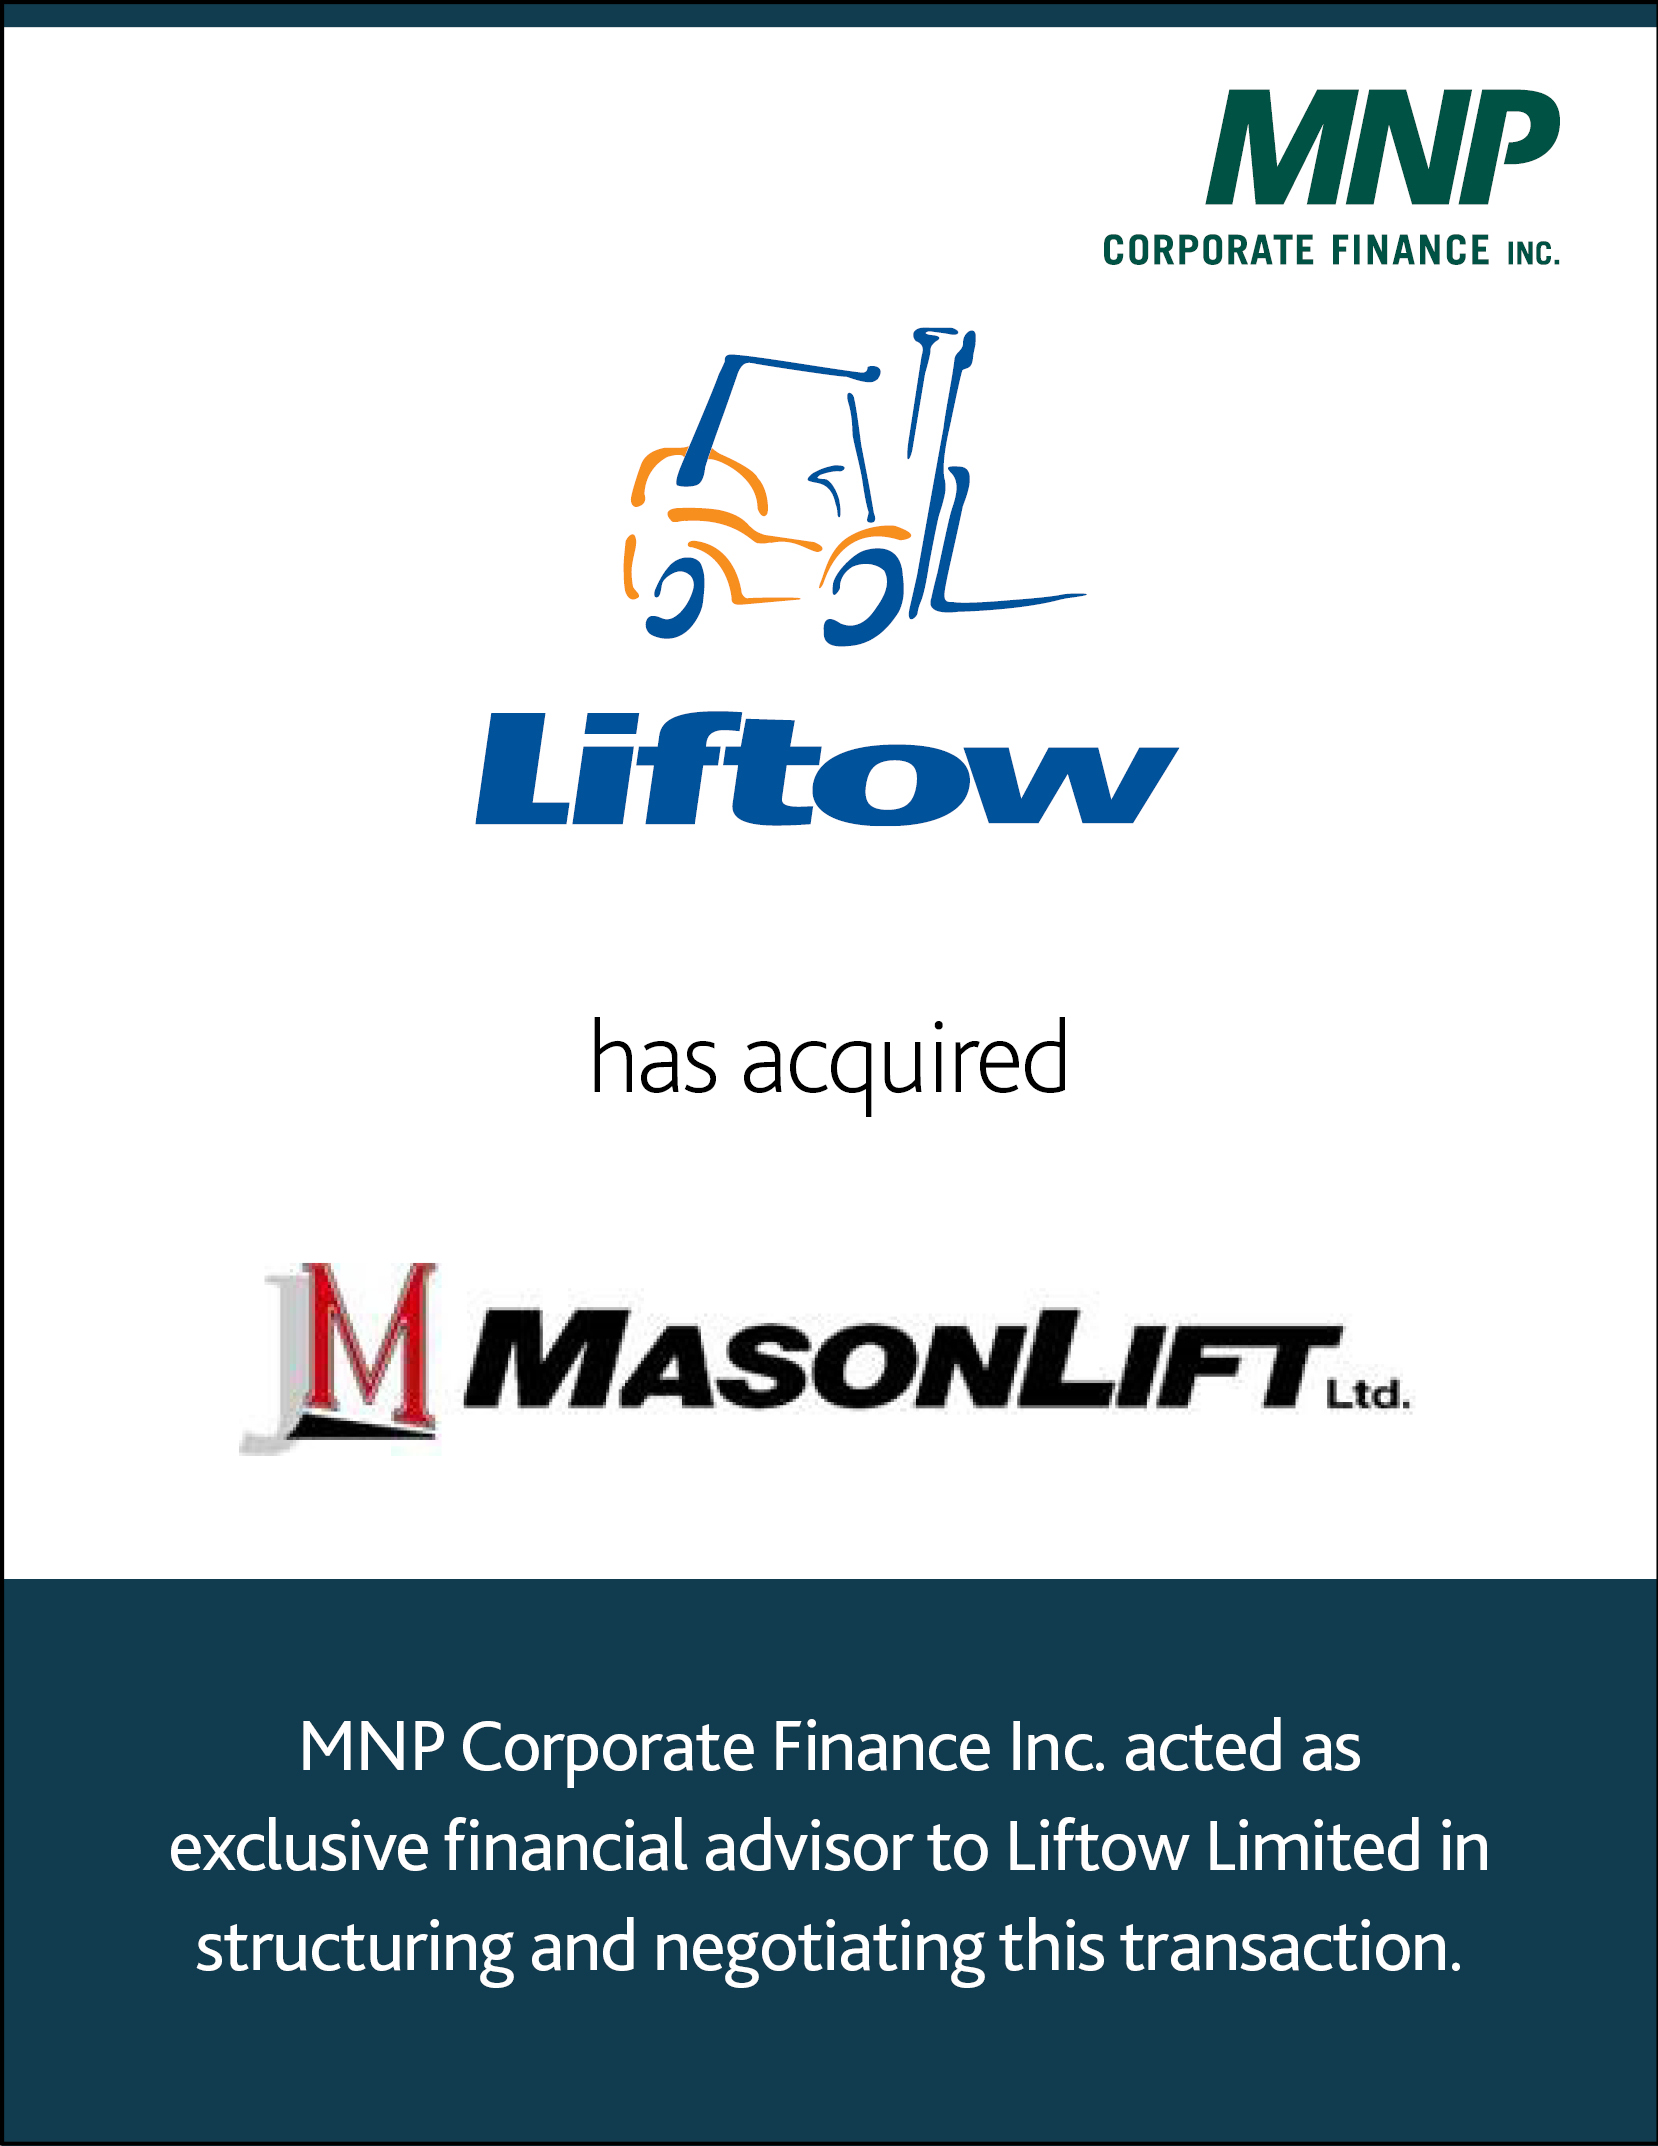 Liftow Limited has acquired MasonLift Ltd.